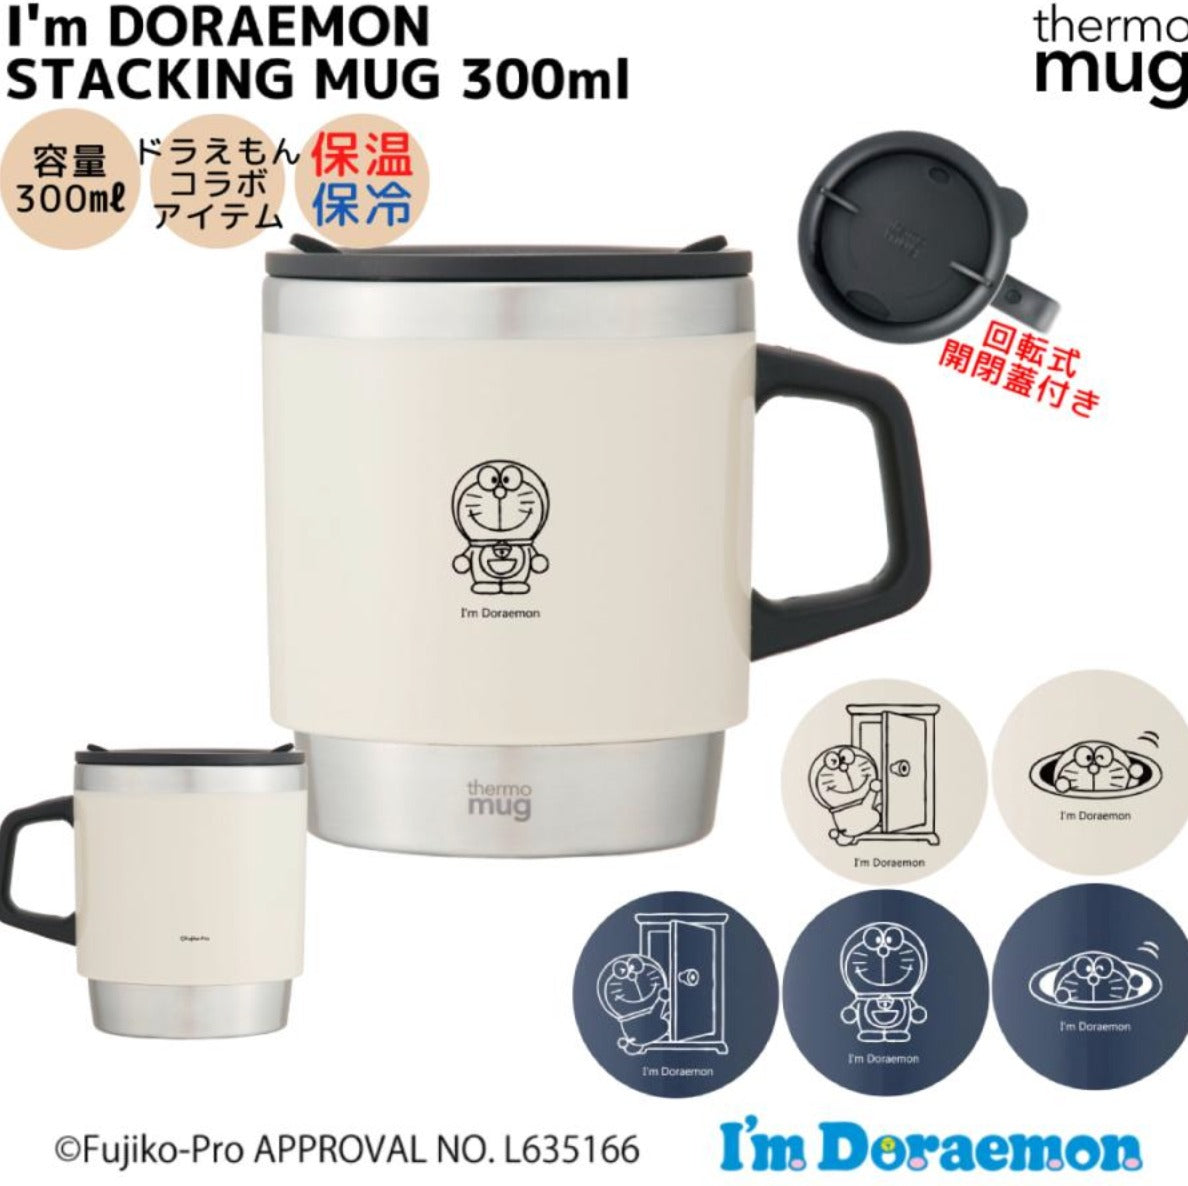 Thermo I’m Doraemon Stacking Mug 300ml